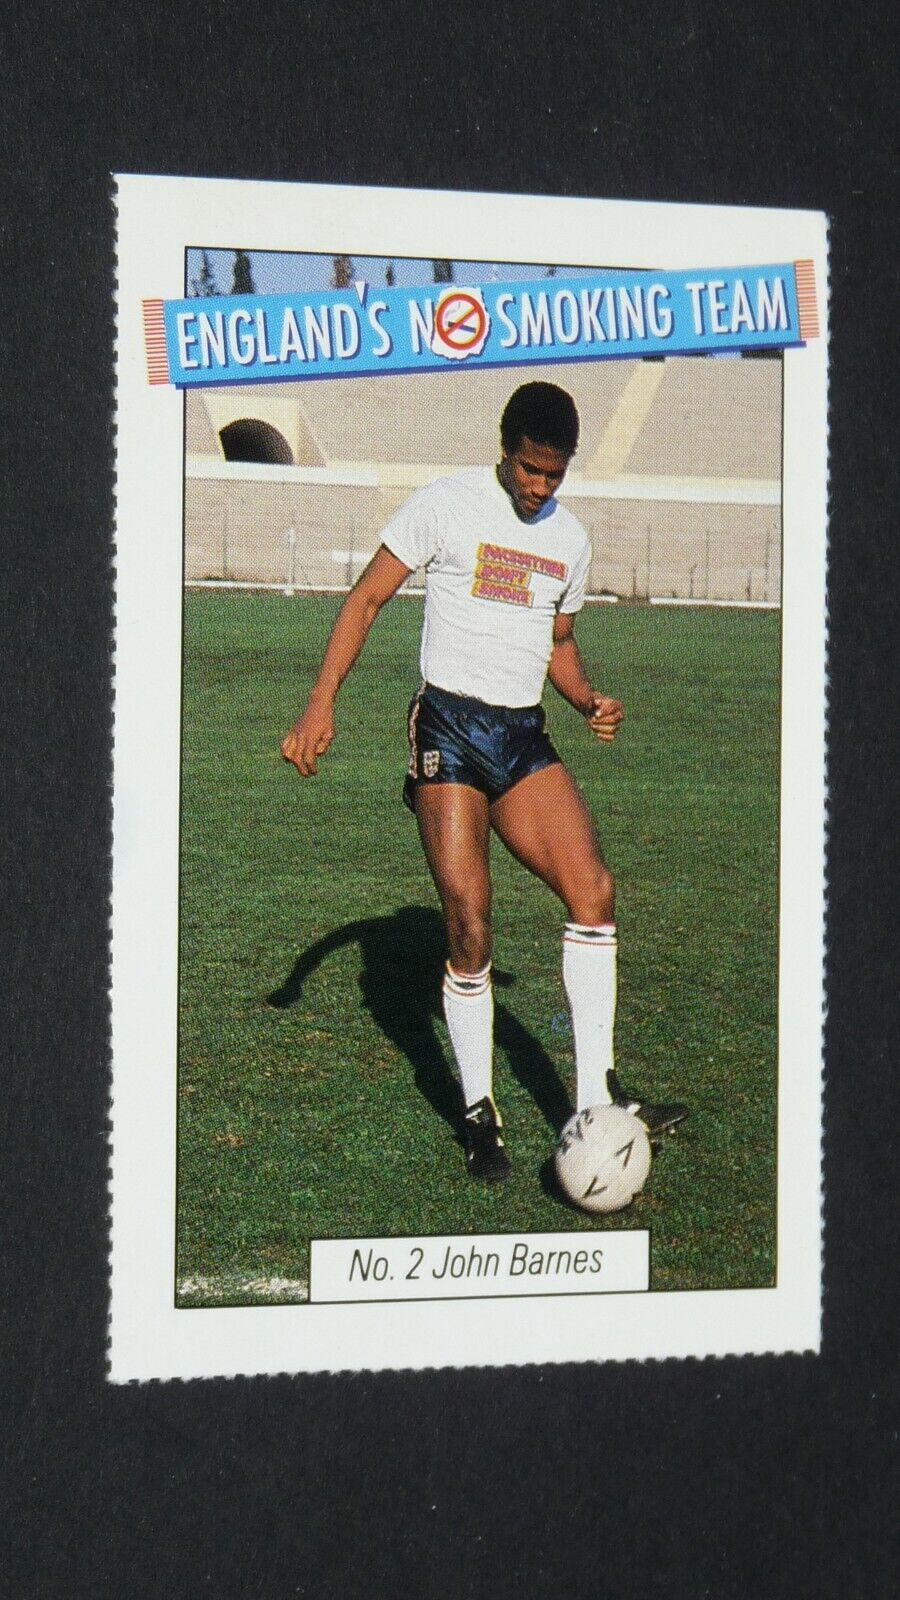 1986 ENGLAND\'S NO SMOKING TEAM CARD FOOTBALL #2 JOHN BARNES WATFORD ENGLAND